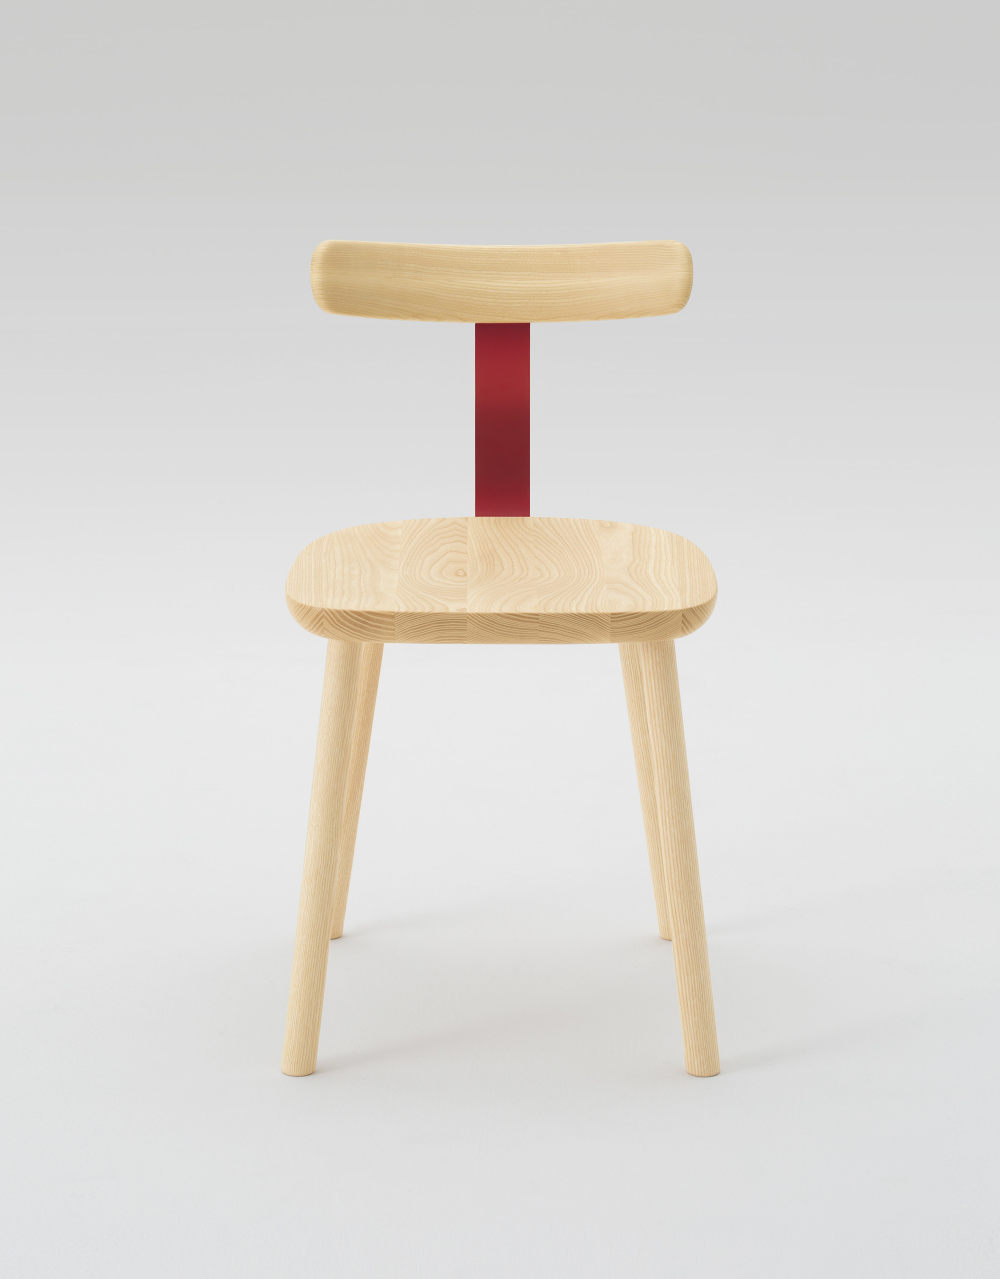 t-o-tables-jasper-morrison-maruni-design-furniture-_rushi_hero-a.jpg